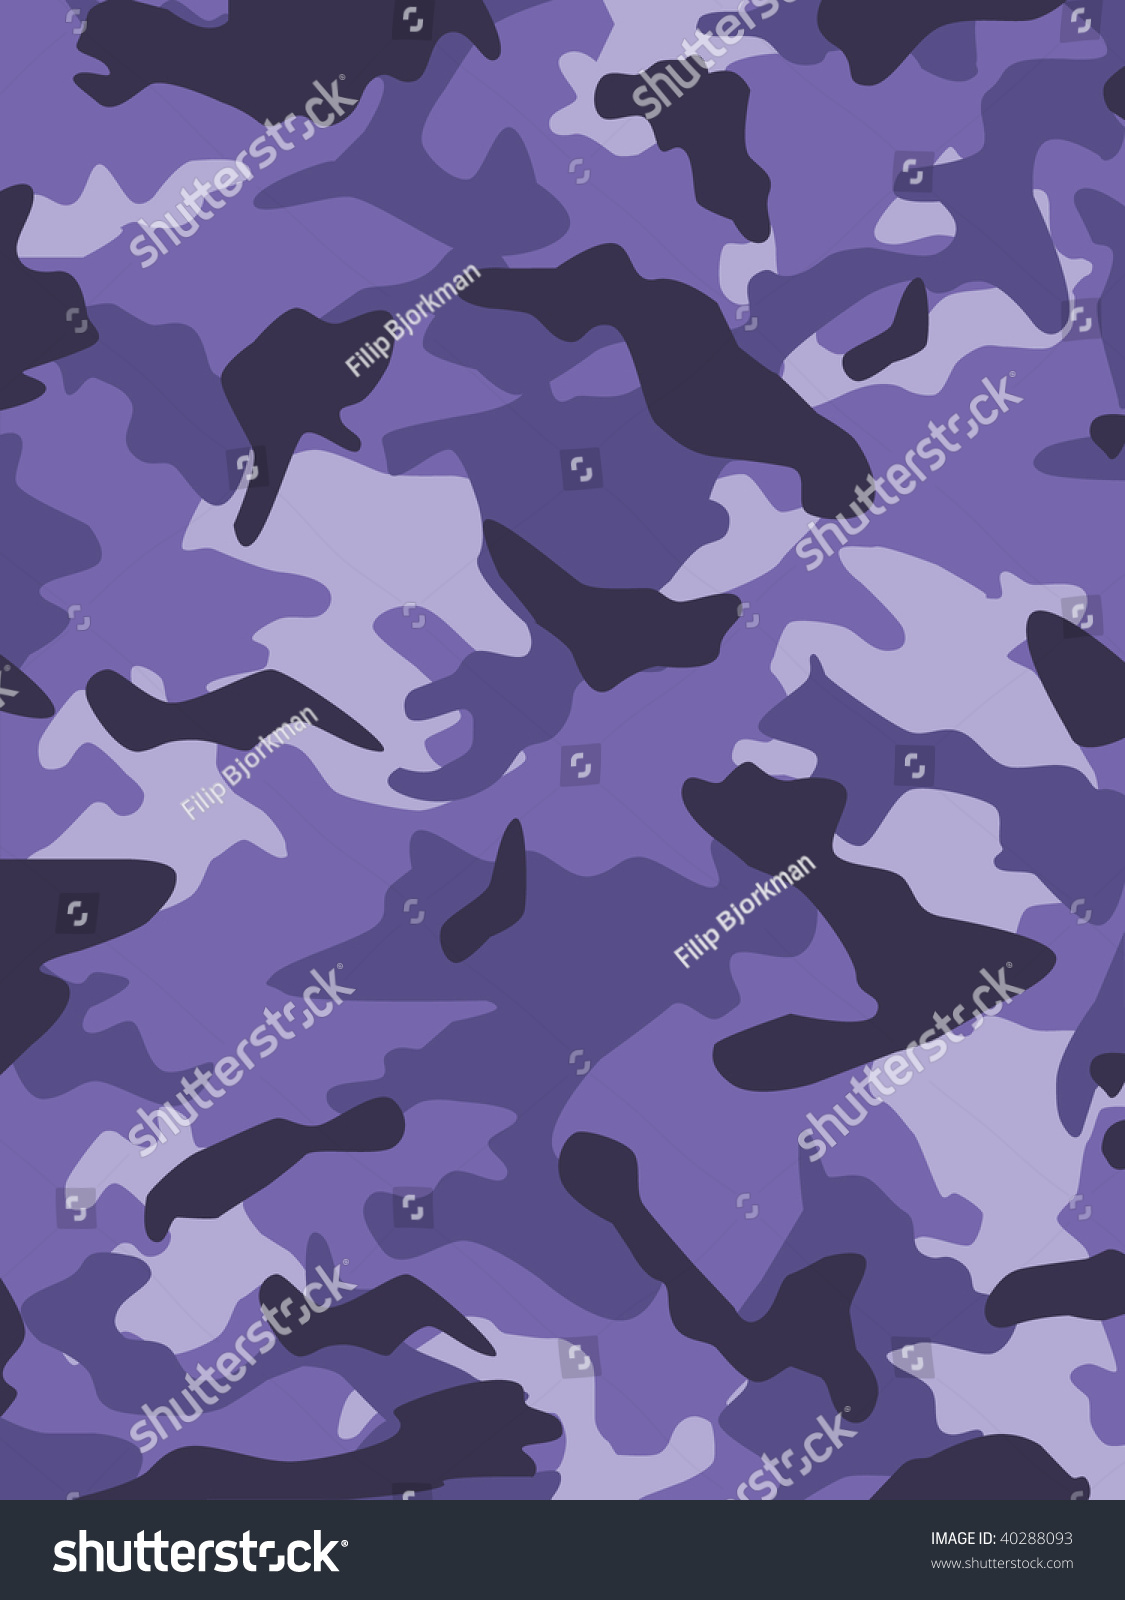 Vector Camouflage Series In Purple Scheme. - 40288093 : Shutterstock